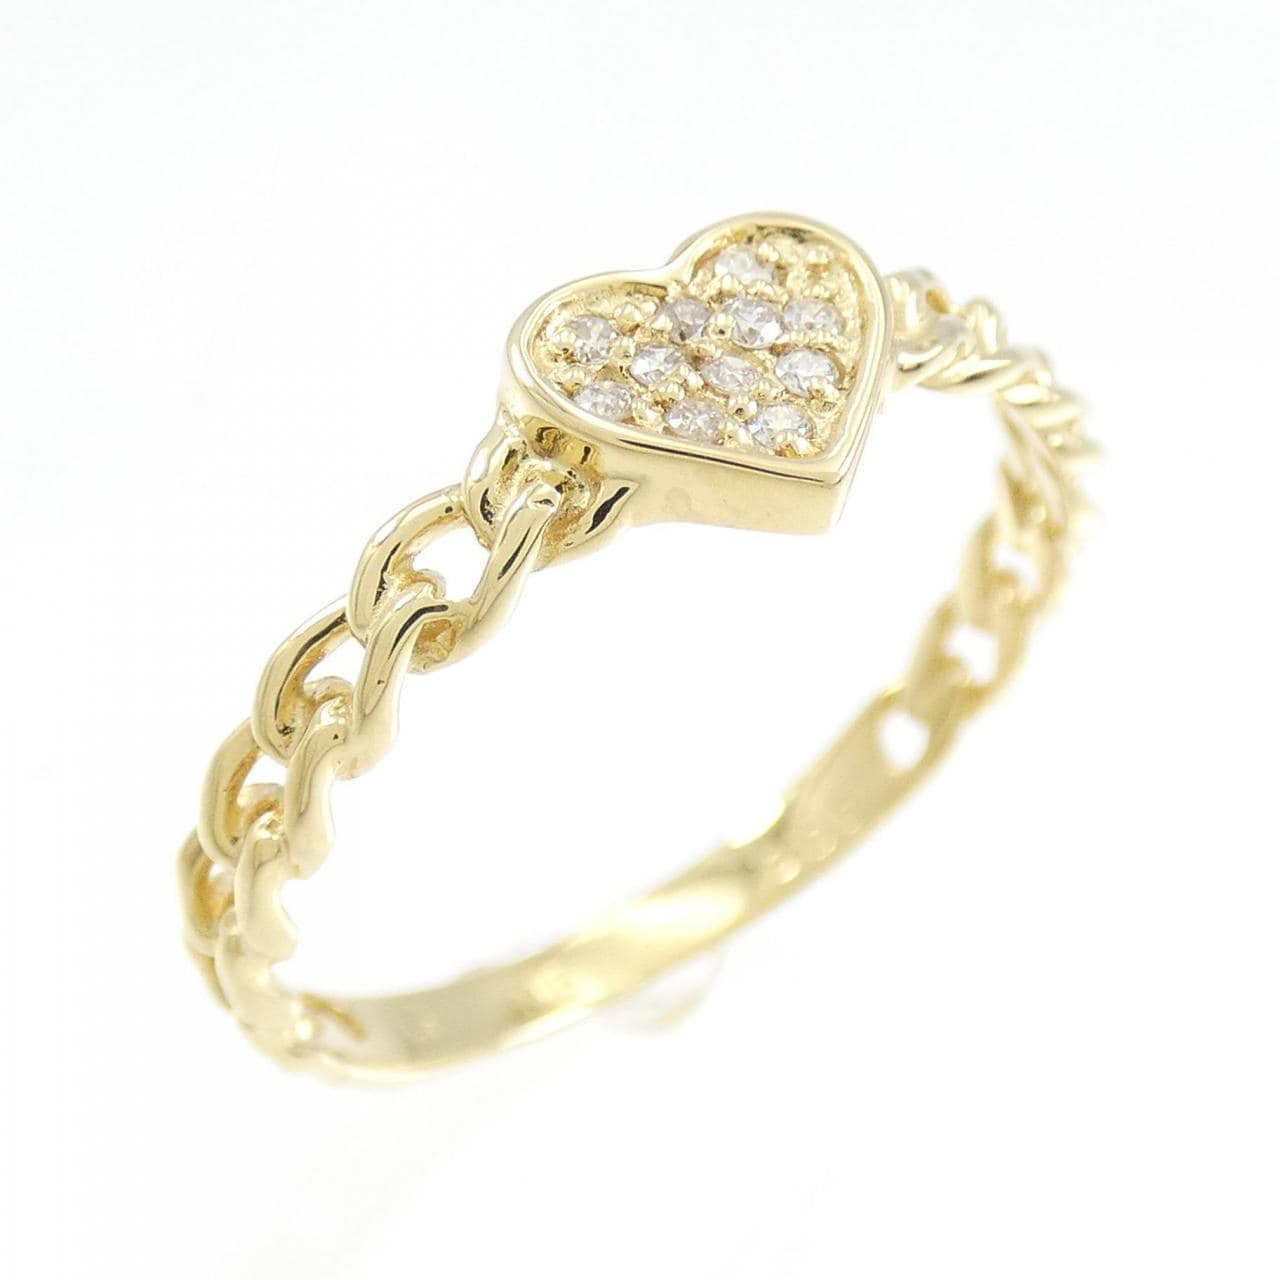 K18YG heart Diamond ring 0.06CT